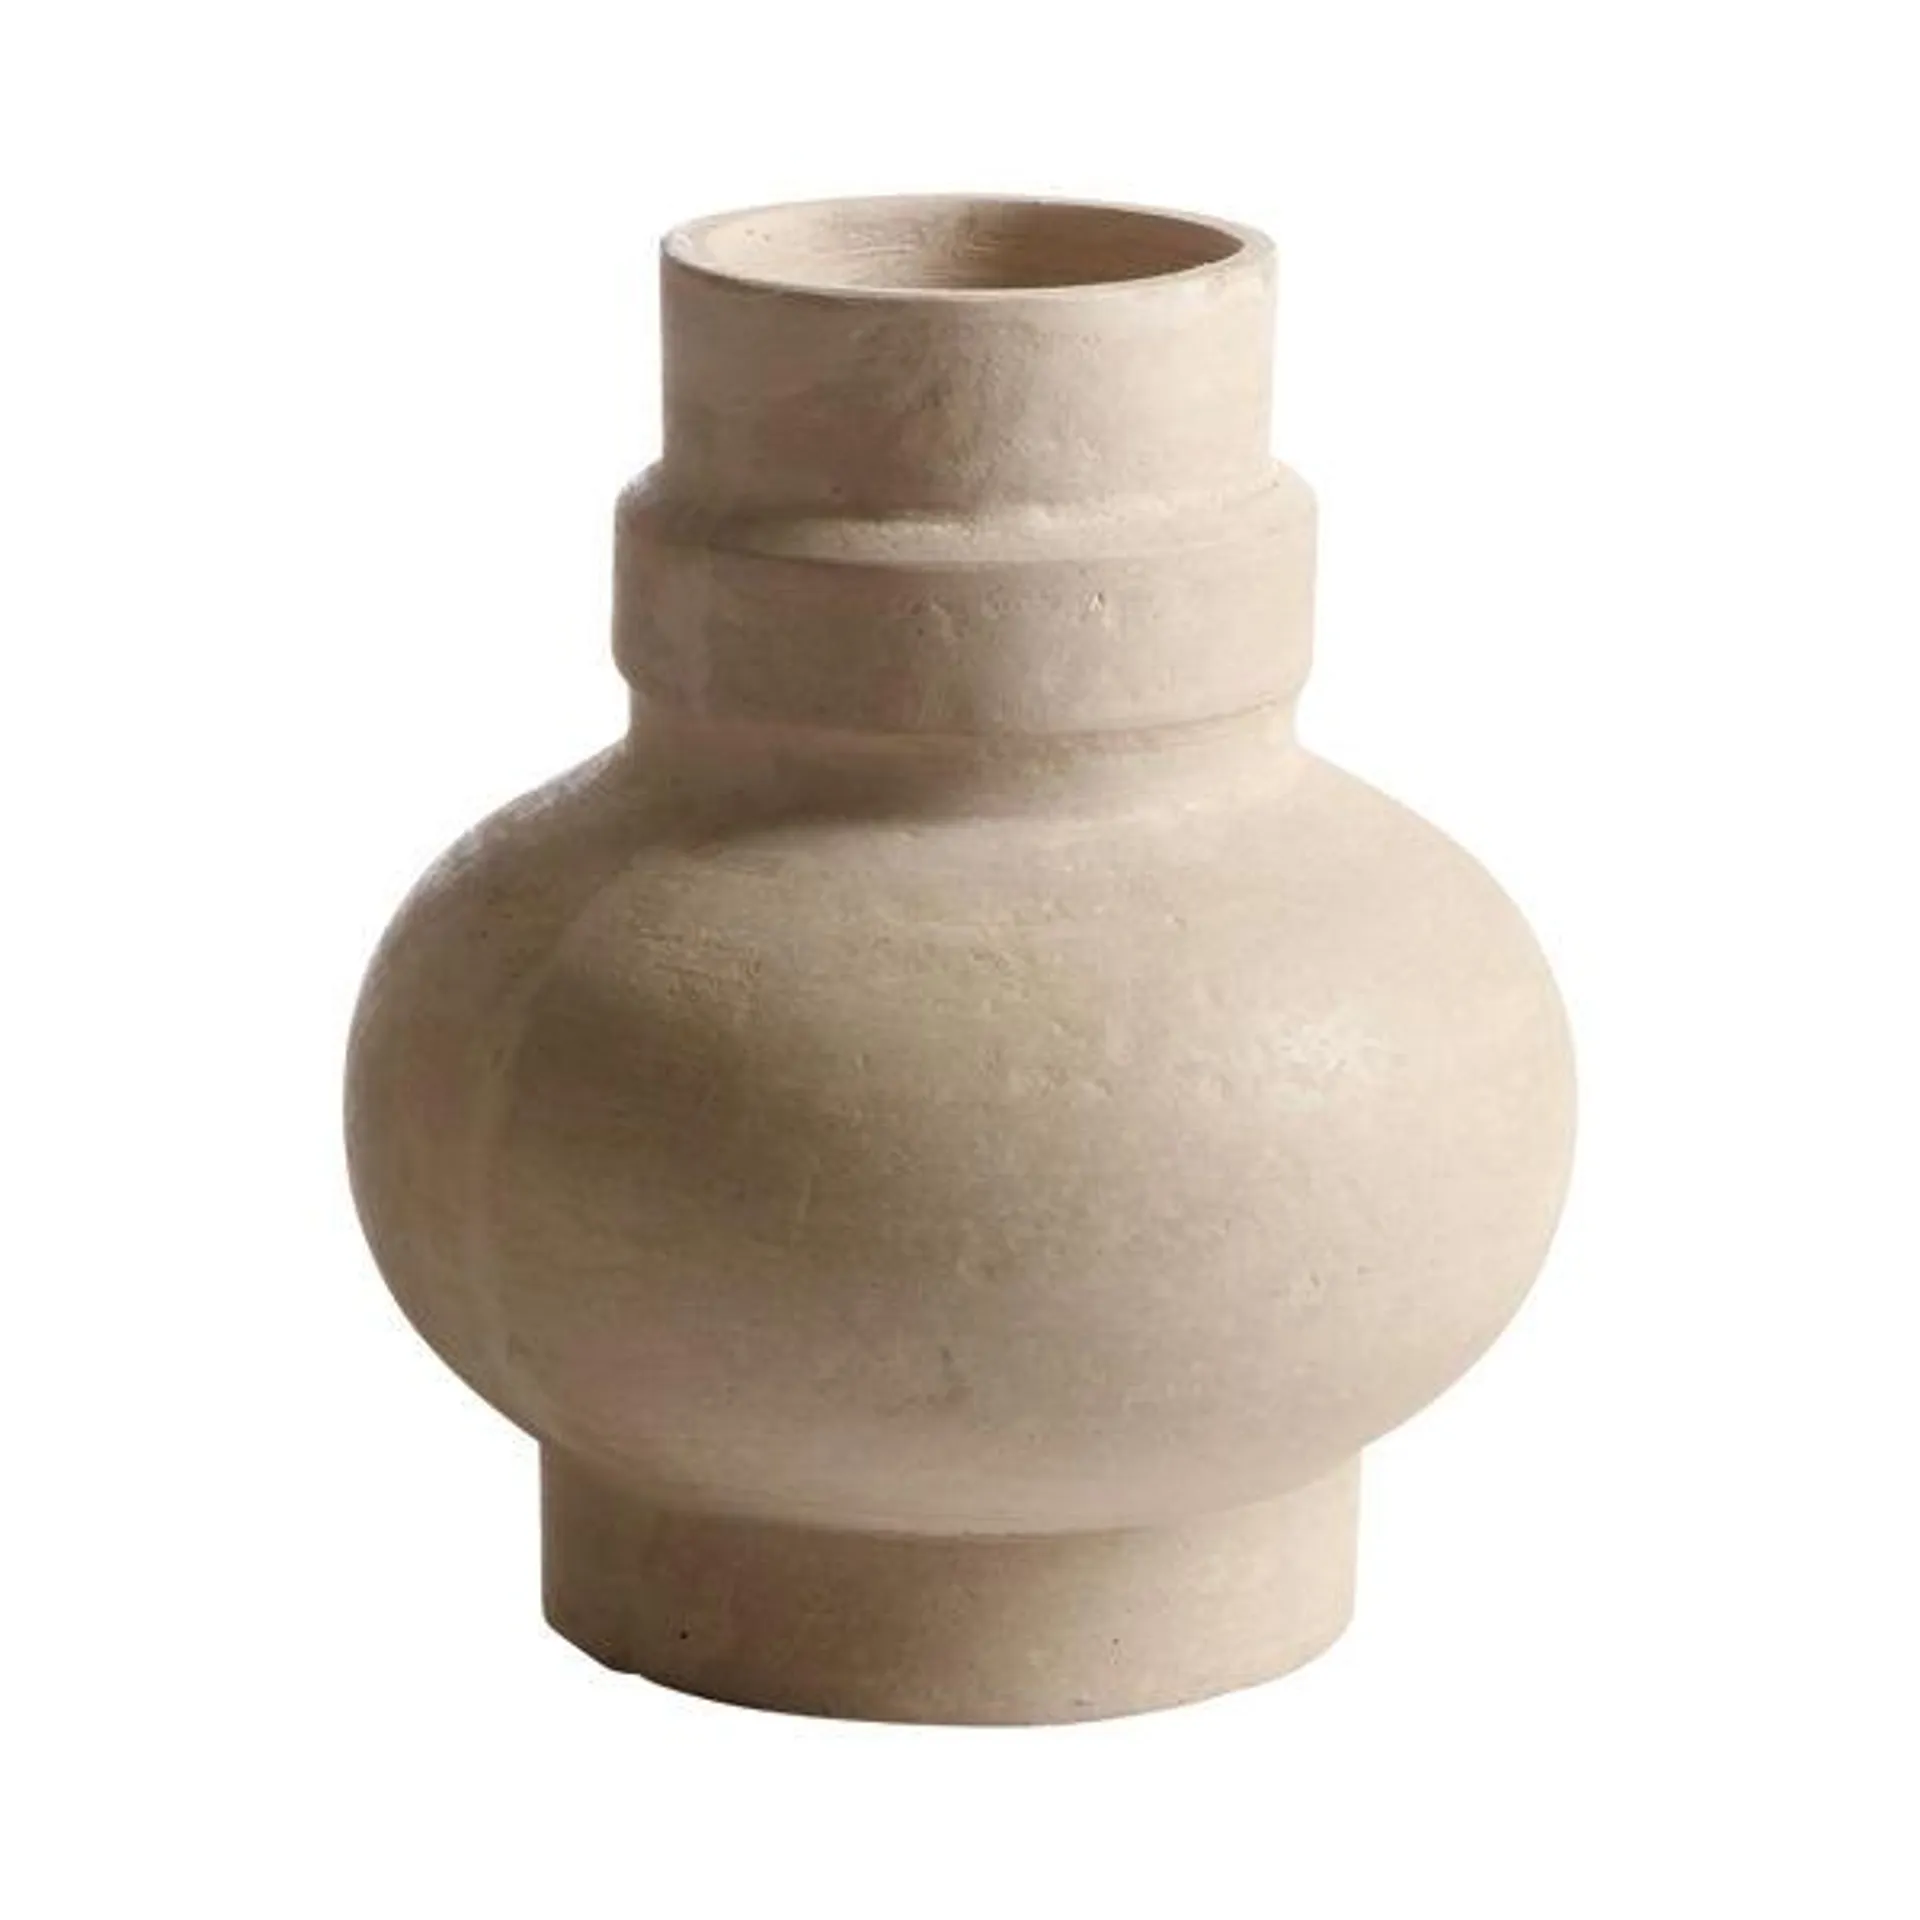 MIMOSA Vas creme b18 h20cm Papier-Maché ej för vatten